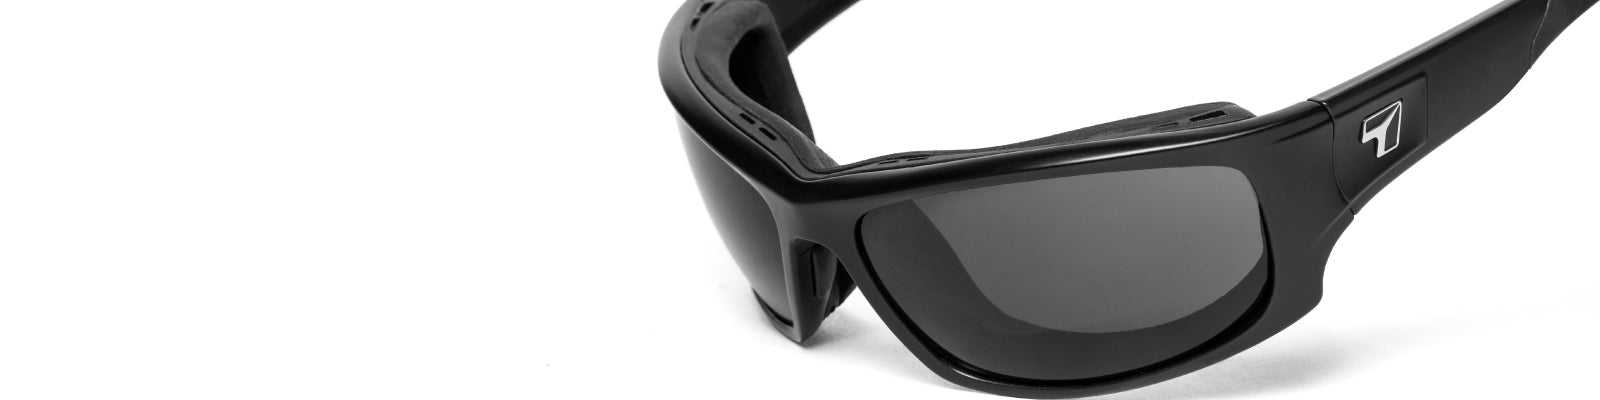 Rake - 7eye - Prescription Motorcycle Sunglasses - Polarized